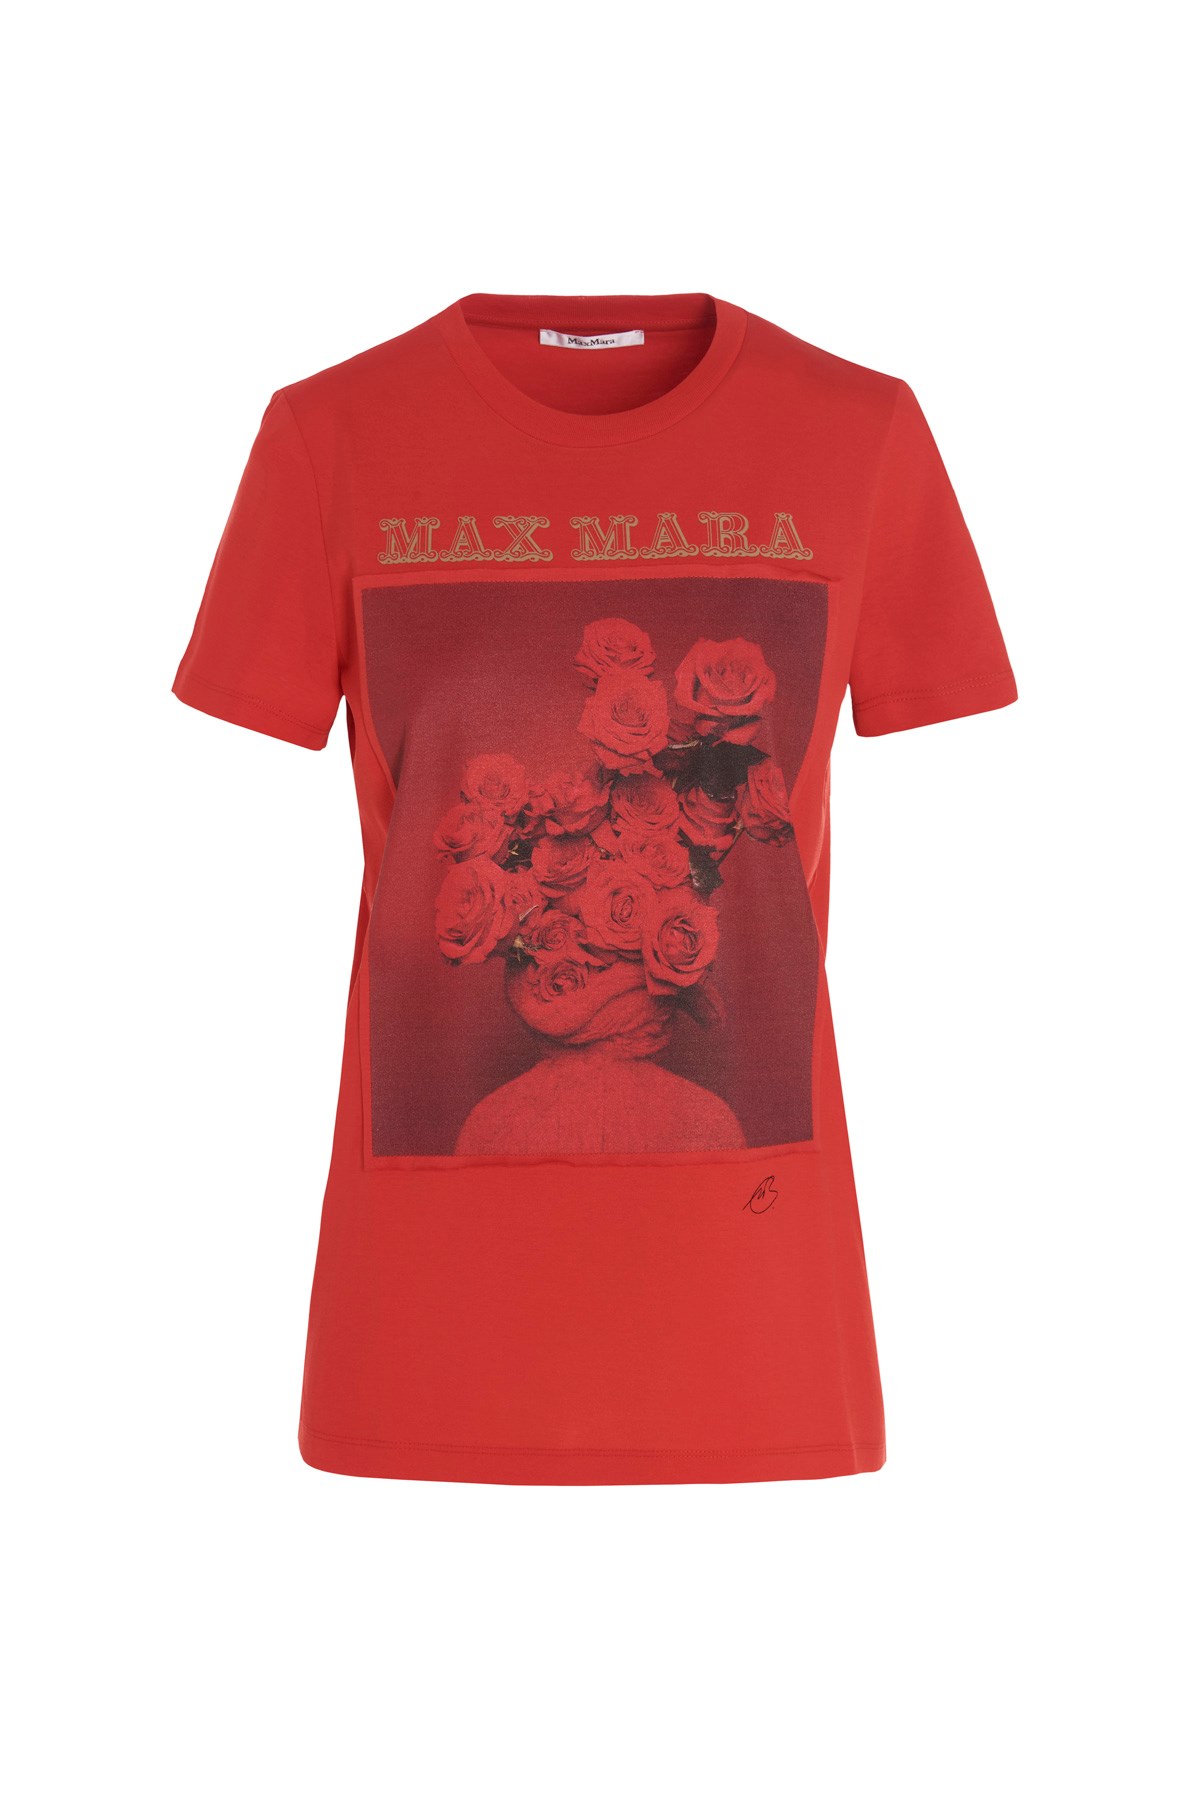 MAX MARA ‘Rosso’ T-Shirt